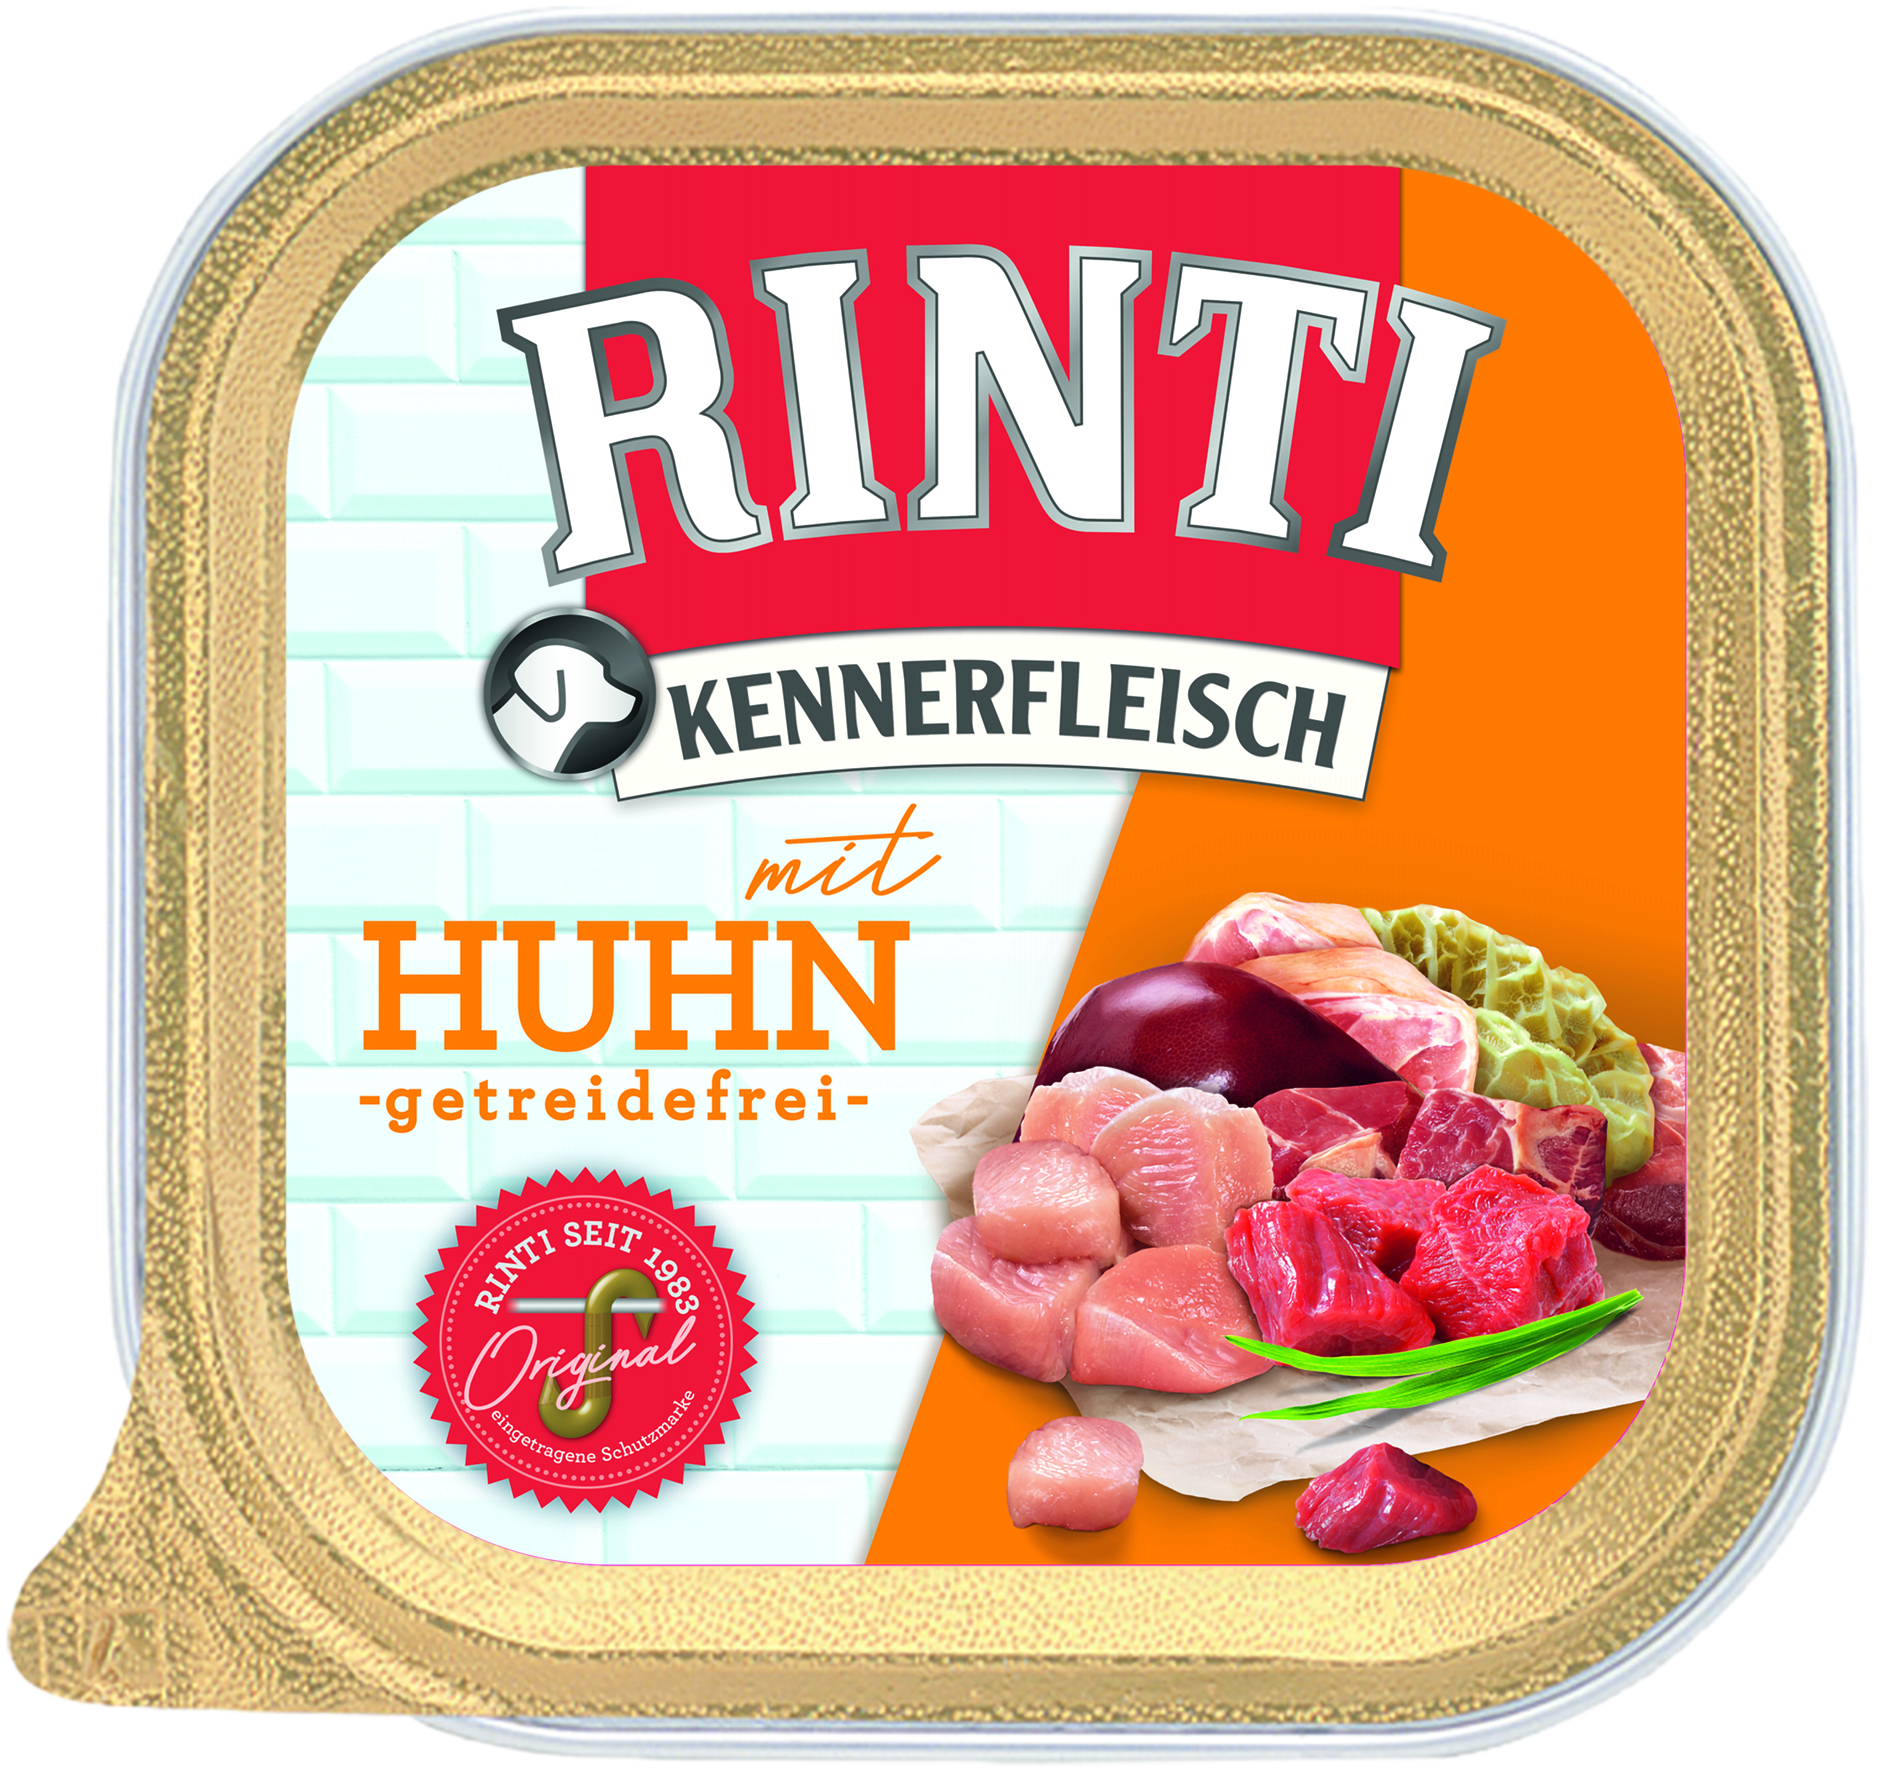 Rinti Kennerfleisch Plus Huhn 300g